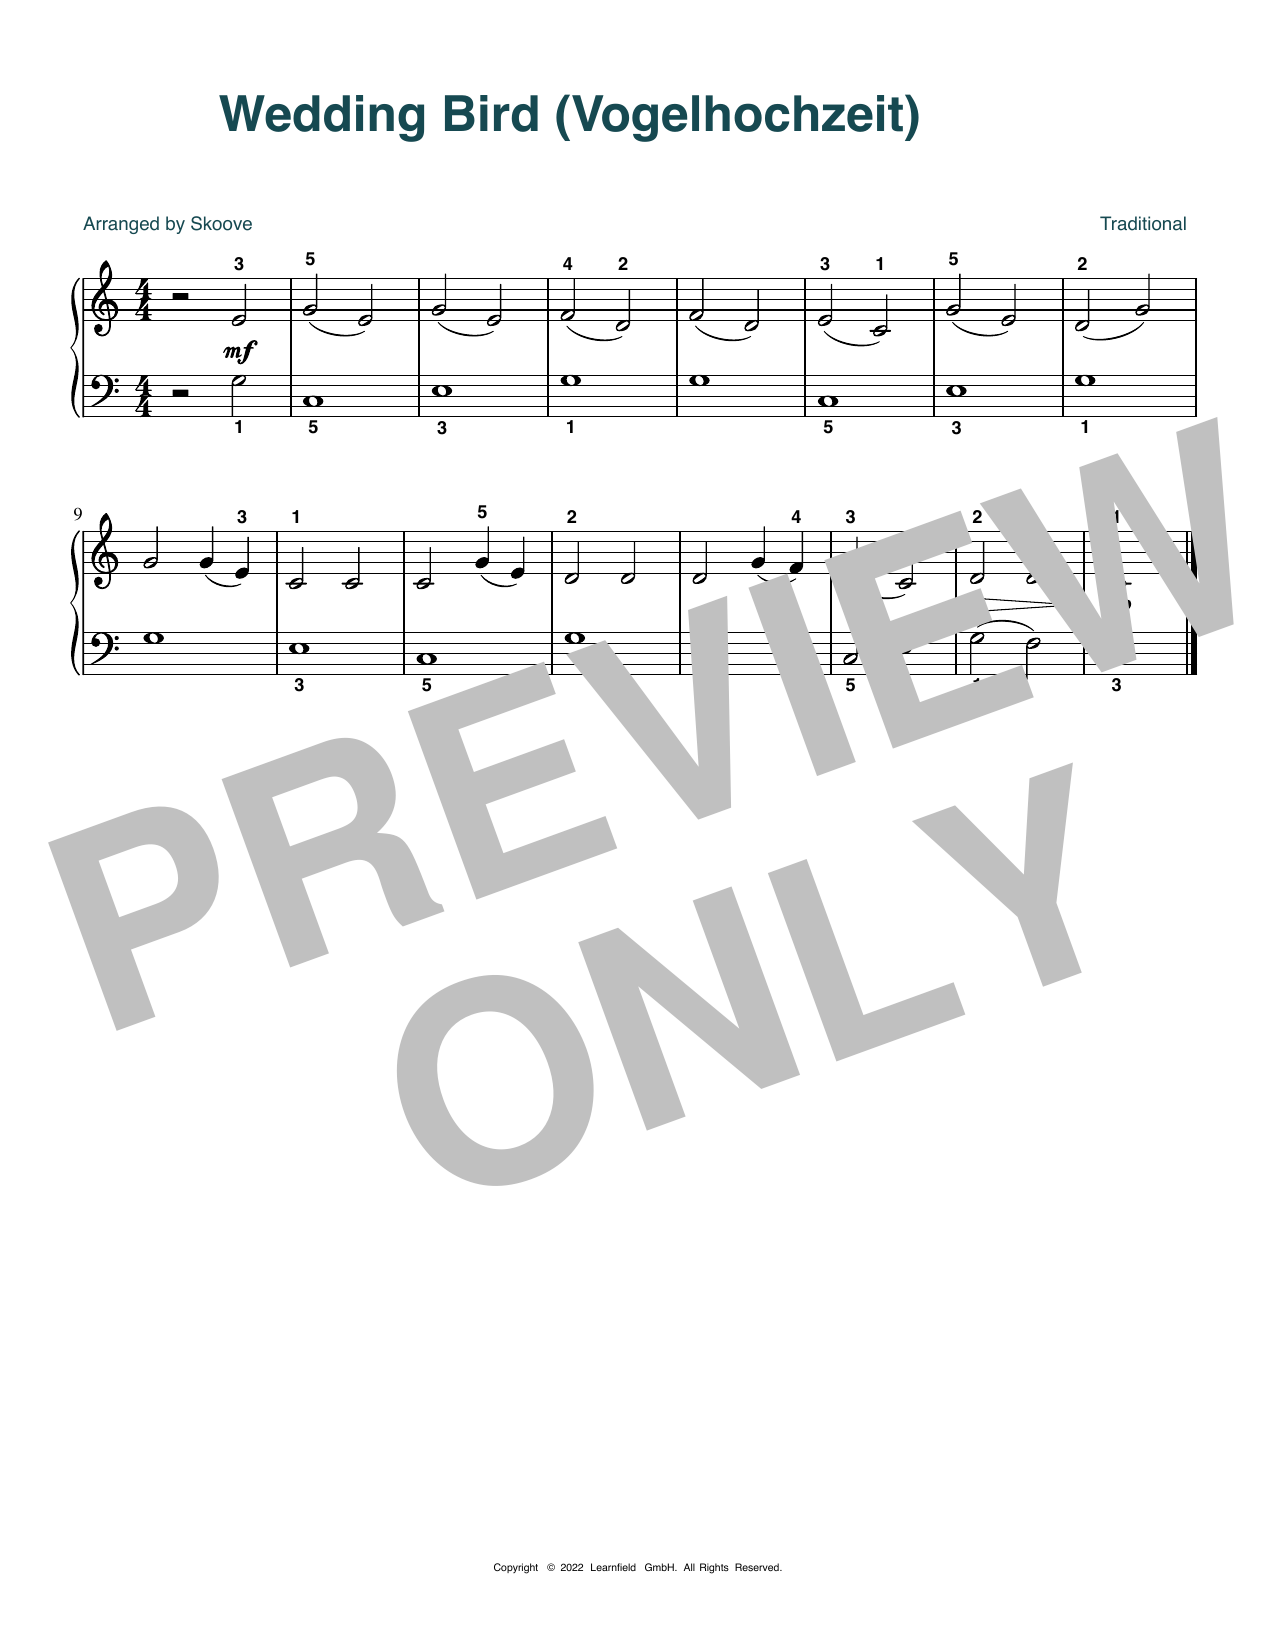 Traditional Wedding Bird (Vogelhochzeit) (arr. Skoove) Sheet Music Notes & Chords for Beginner Piano (Abridged) - Download or Print PDF